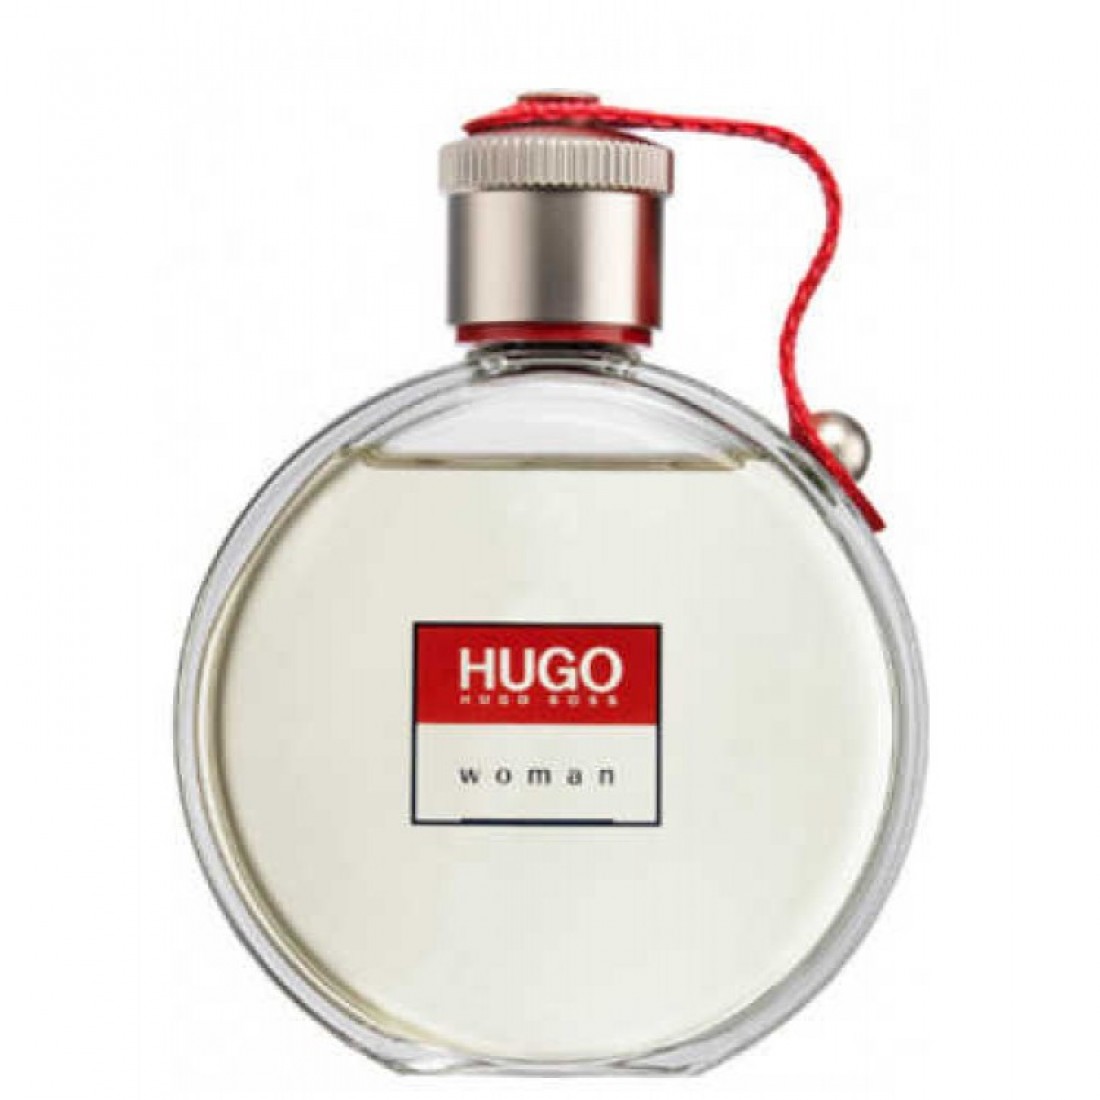 Hugo для женщин. Hugo Boss woman духи. Духи Хьюго босс Вумен. Hugo Boss духи женские Hugo woman. Hugo Boss Hugo woman 1997.